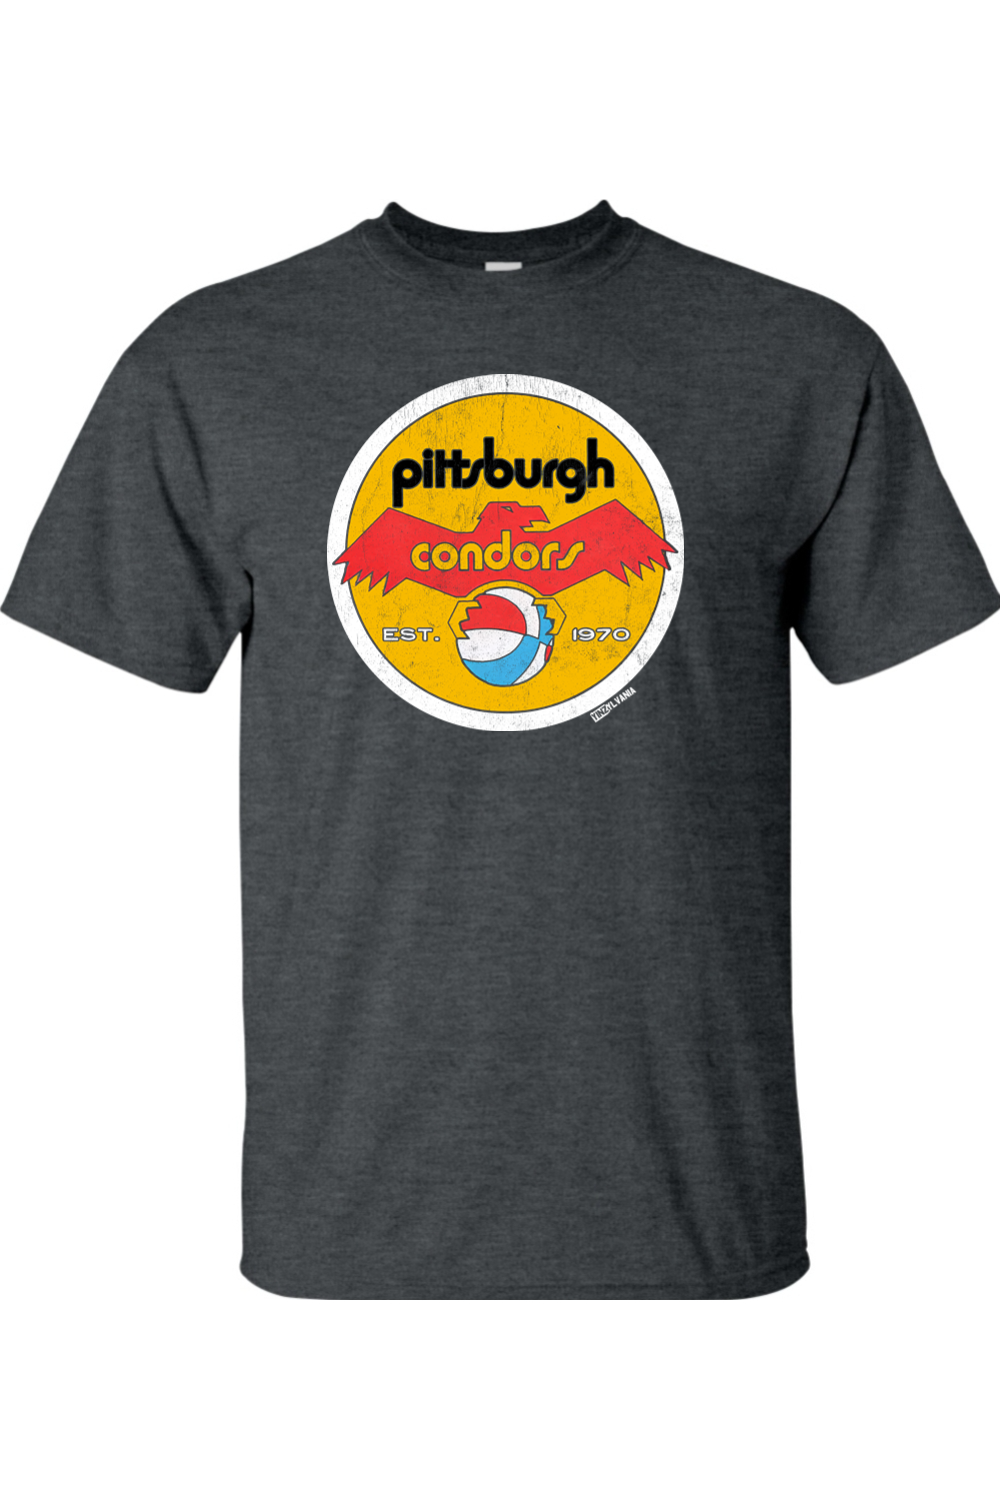 Pittsburgh Condors Basketball (ABA) - 1970 - Big & Tall Tee - Yinzylvania